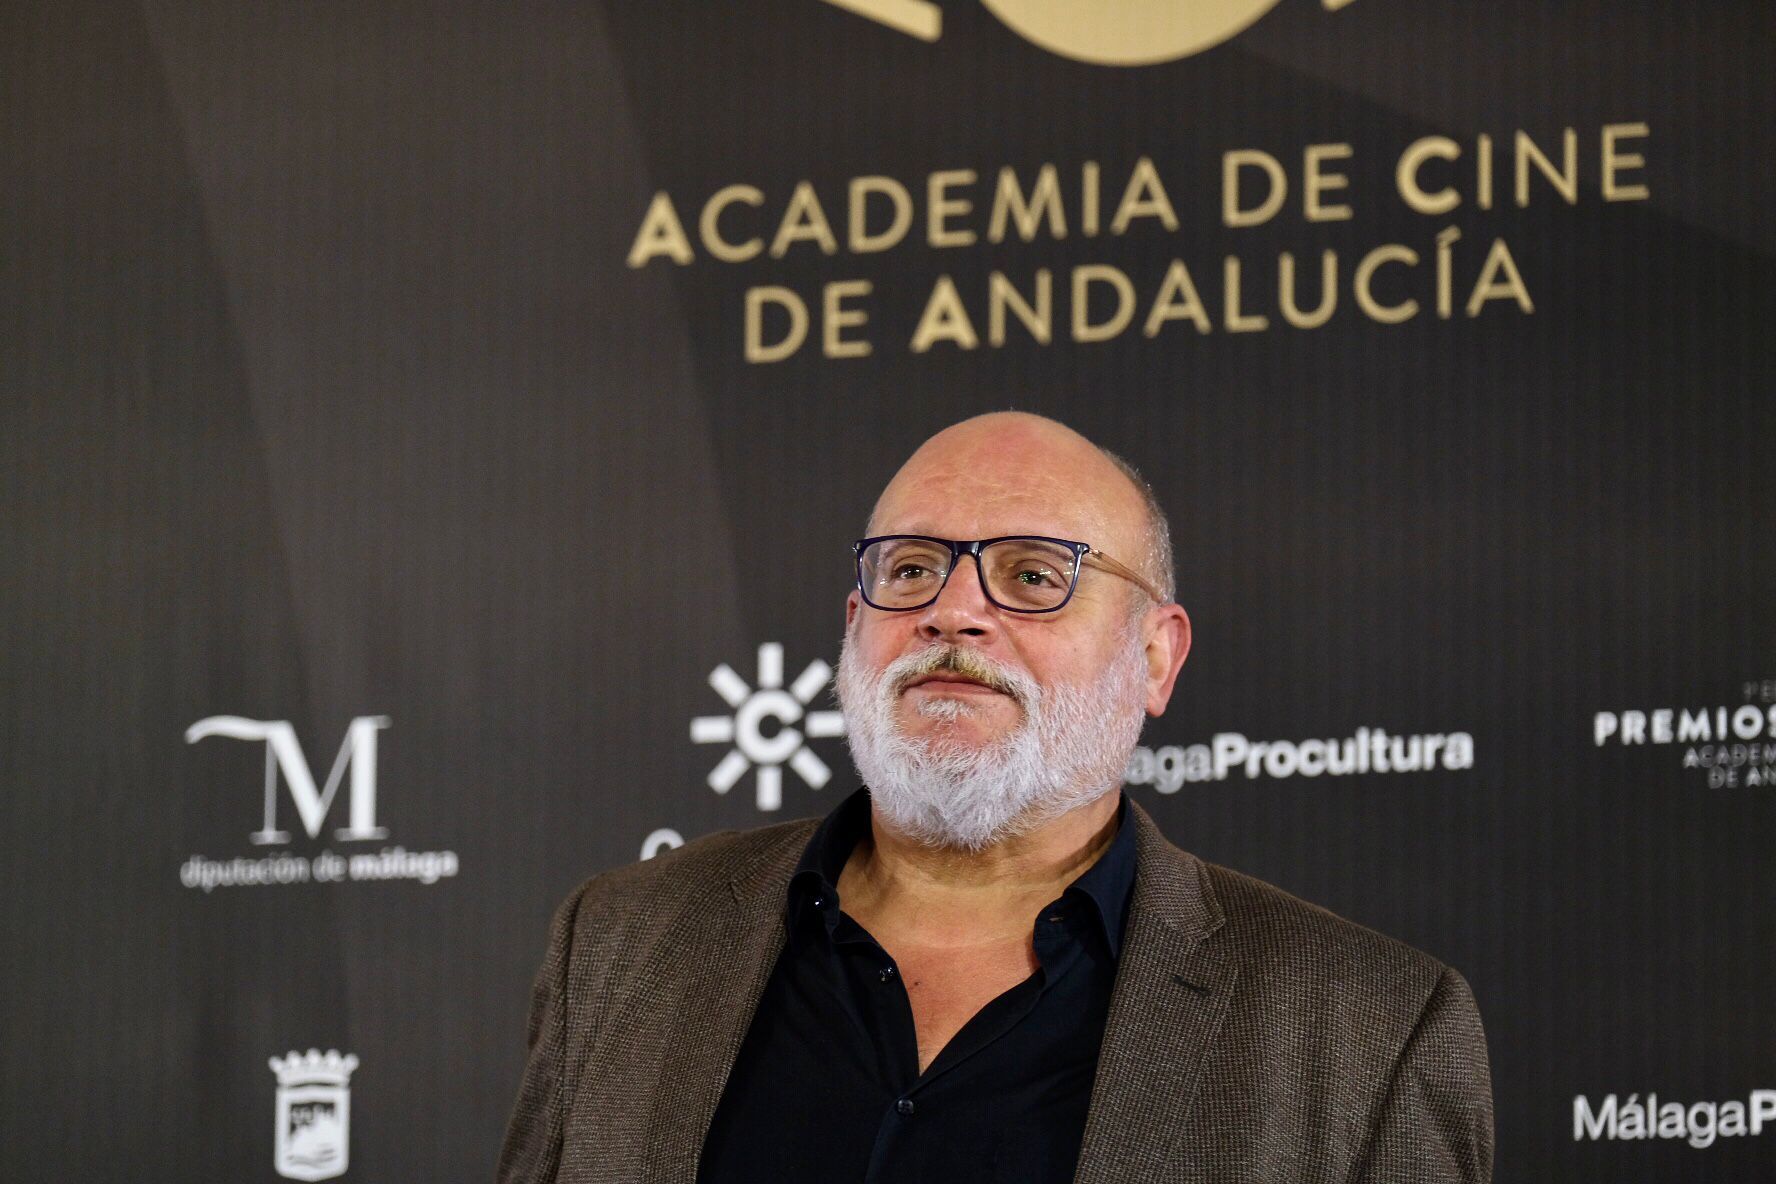 I Premios Carmen del Cine Andaluz